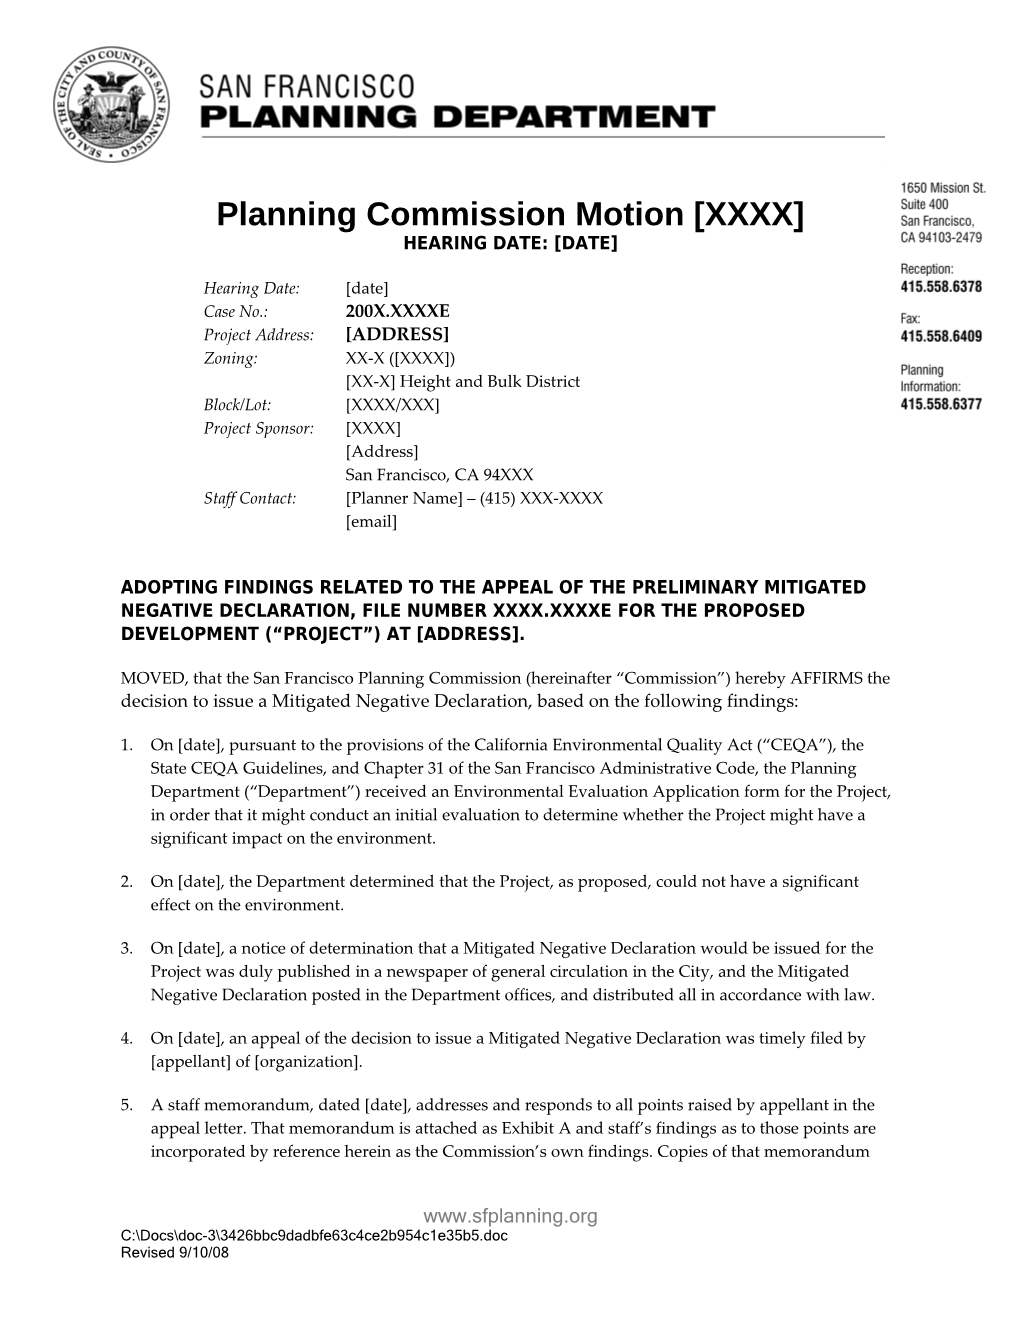 Planning Commission Motion XXXX